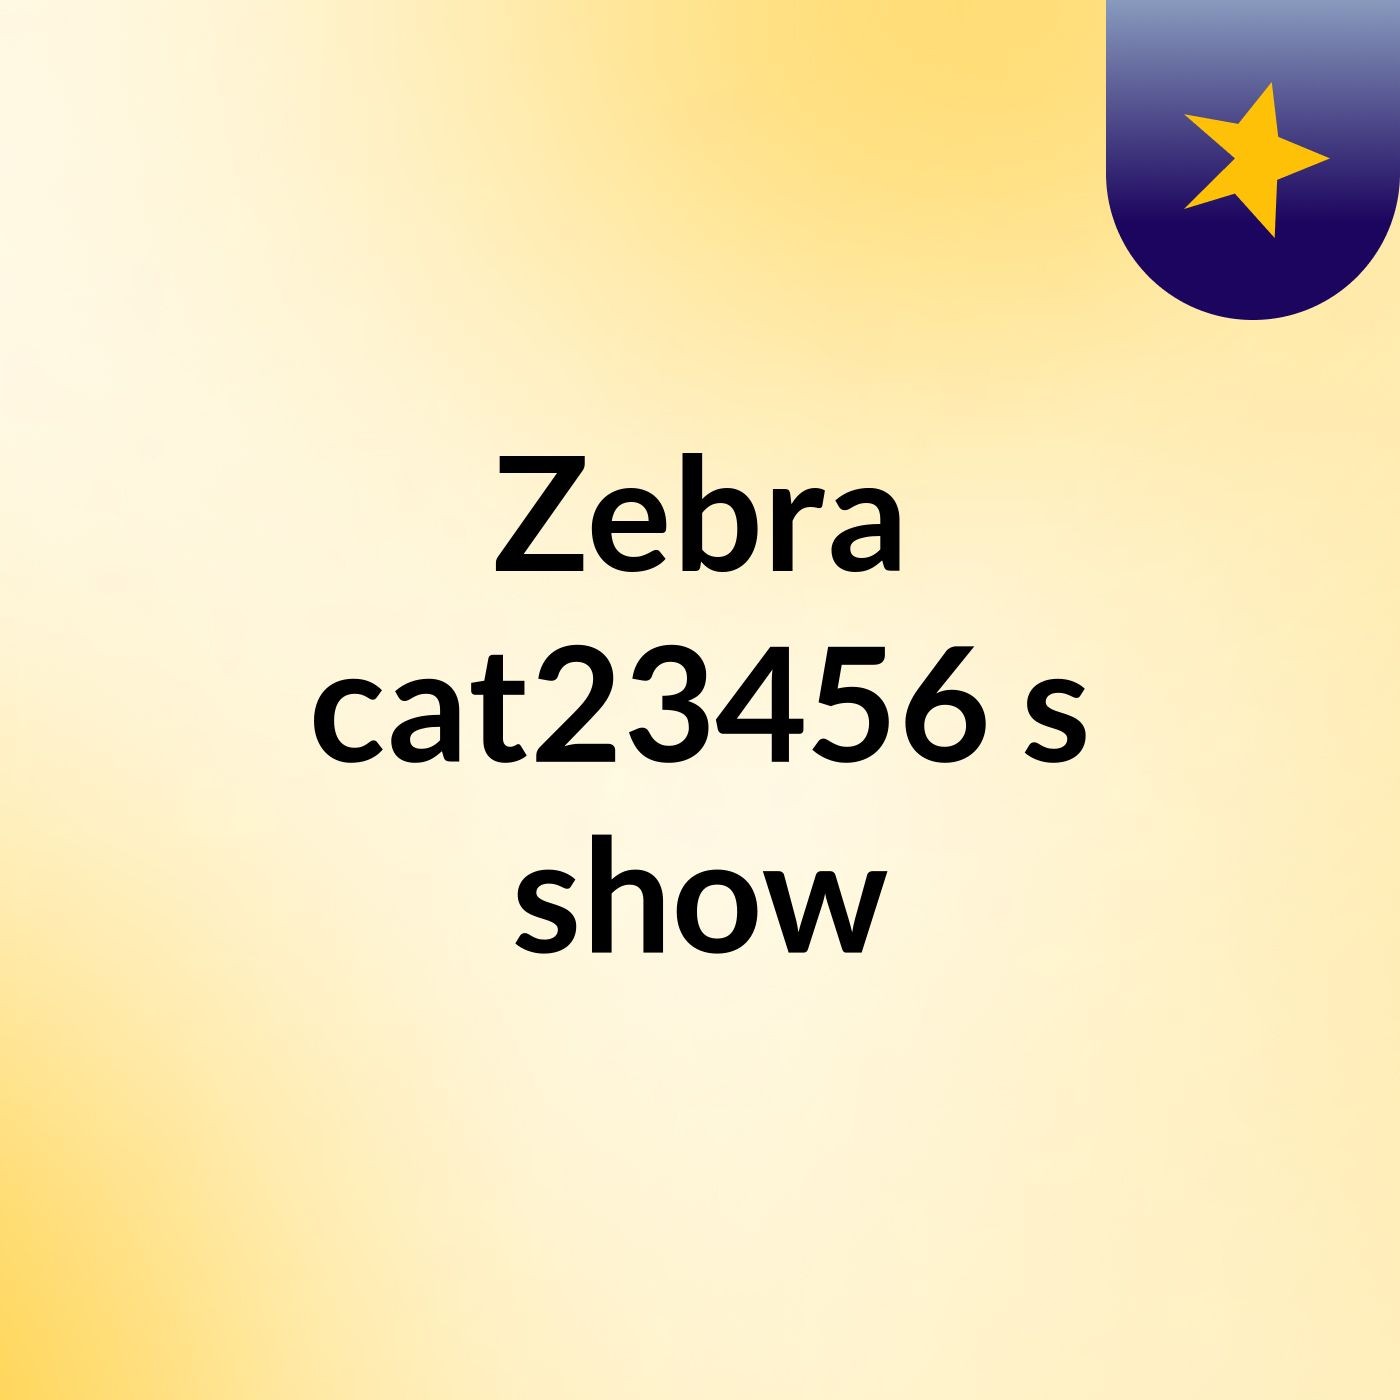 Episode 3 - Zebra cat23456's show